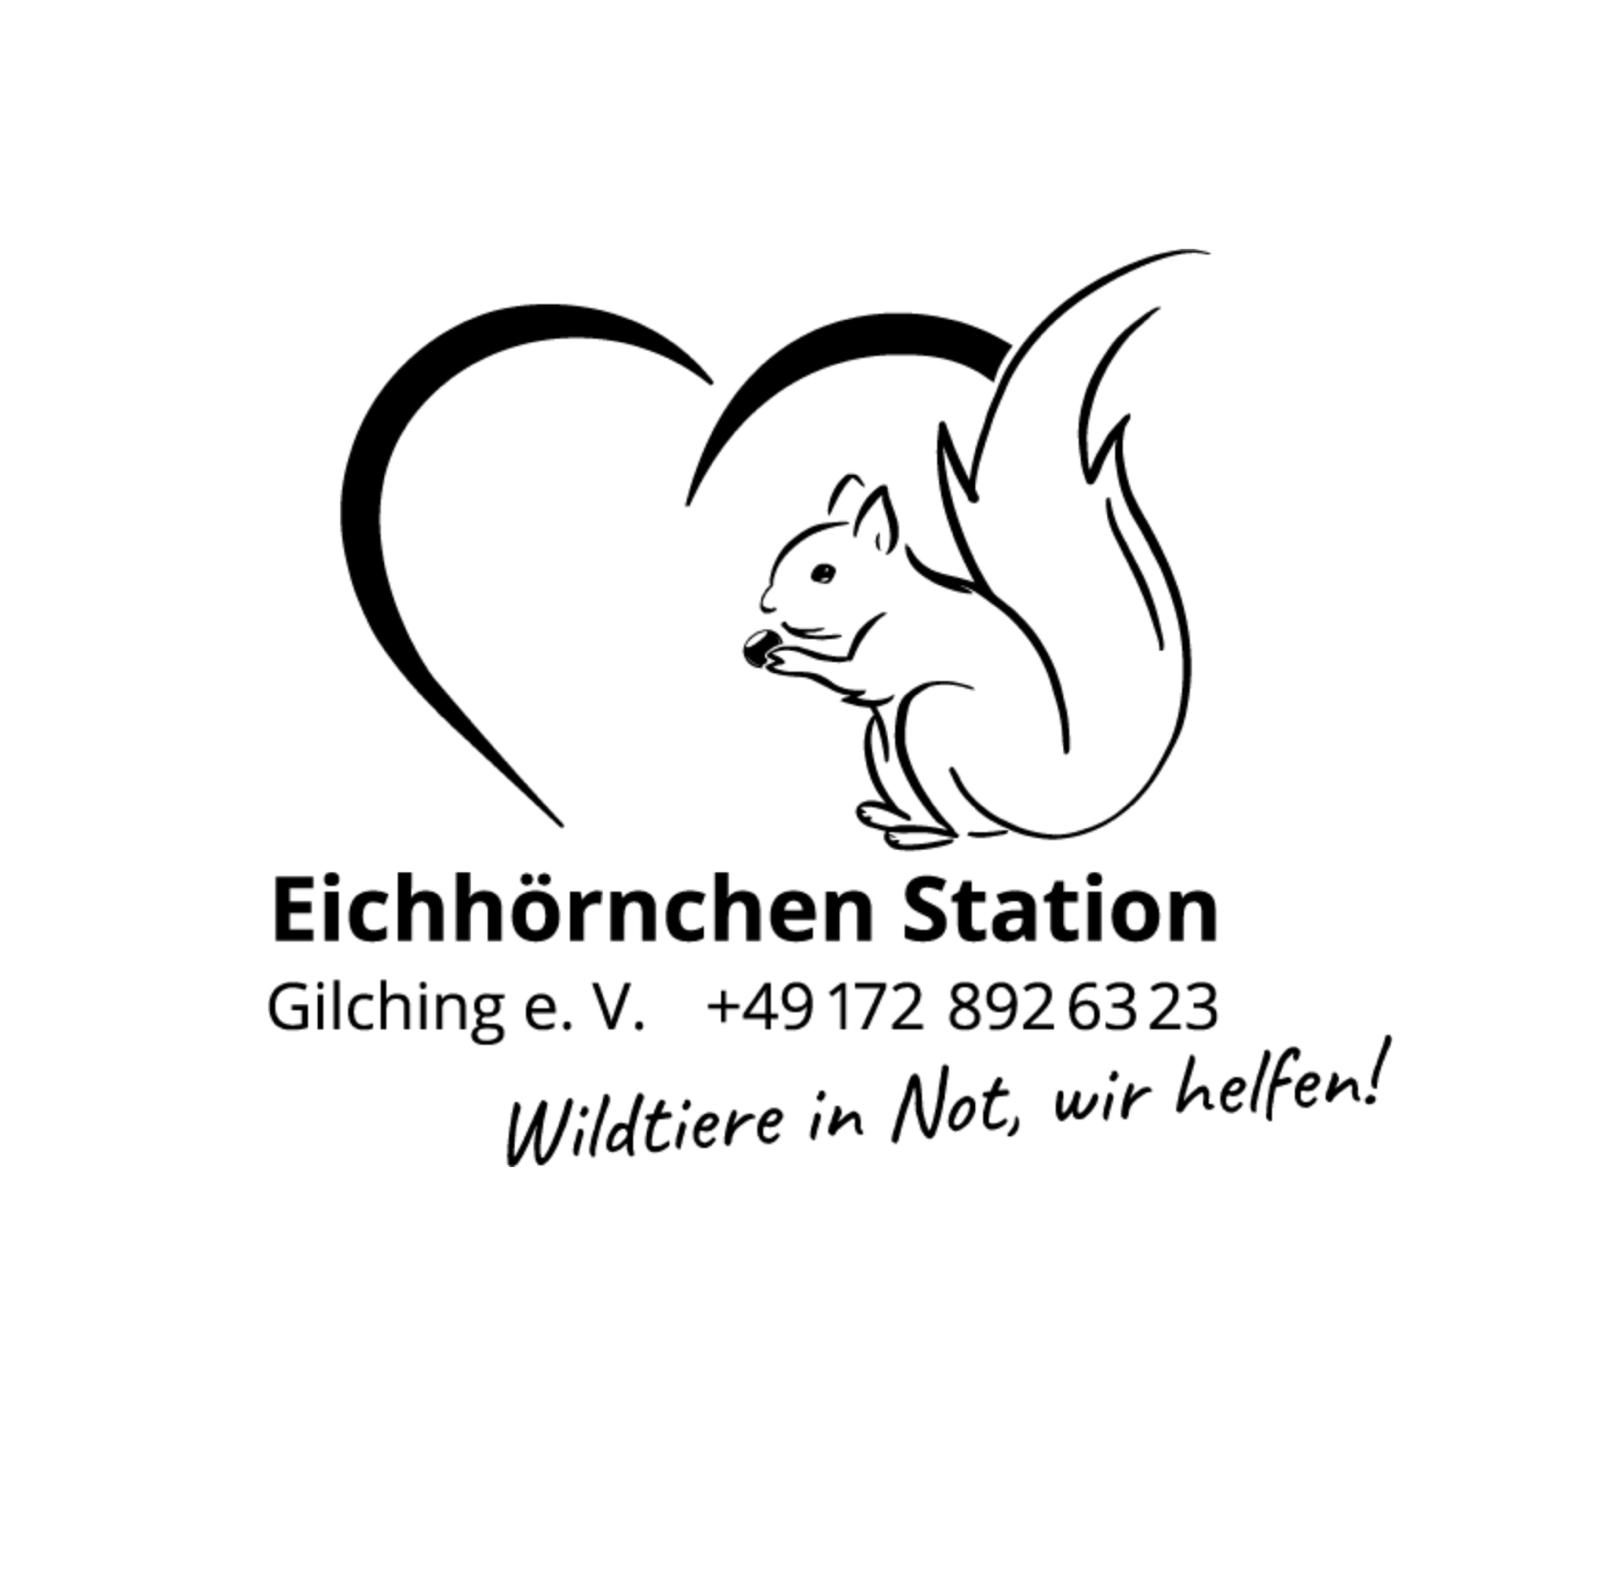 Eichhörnchen Station Gilching e. V.